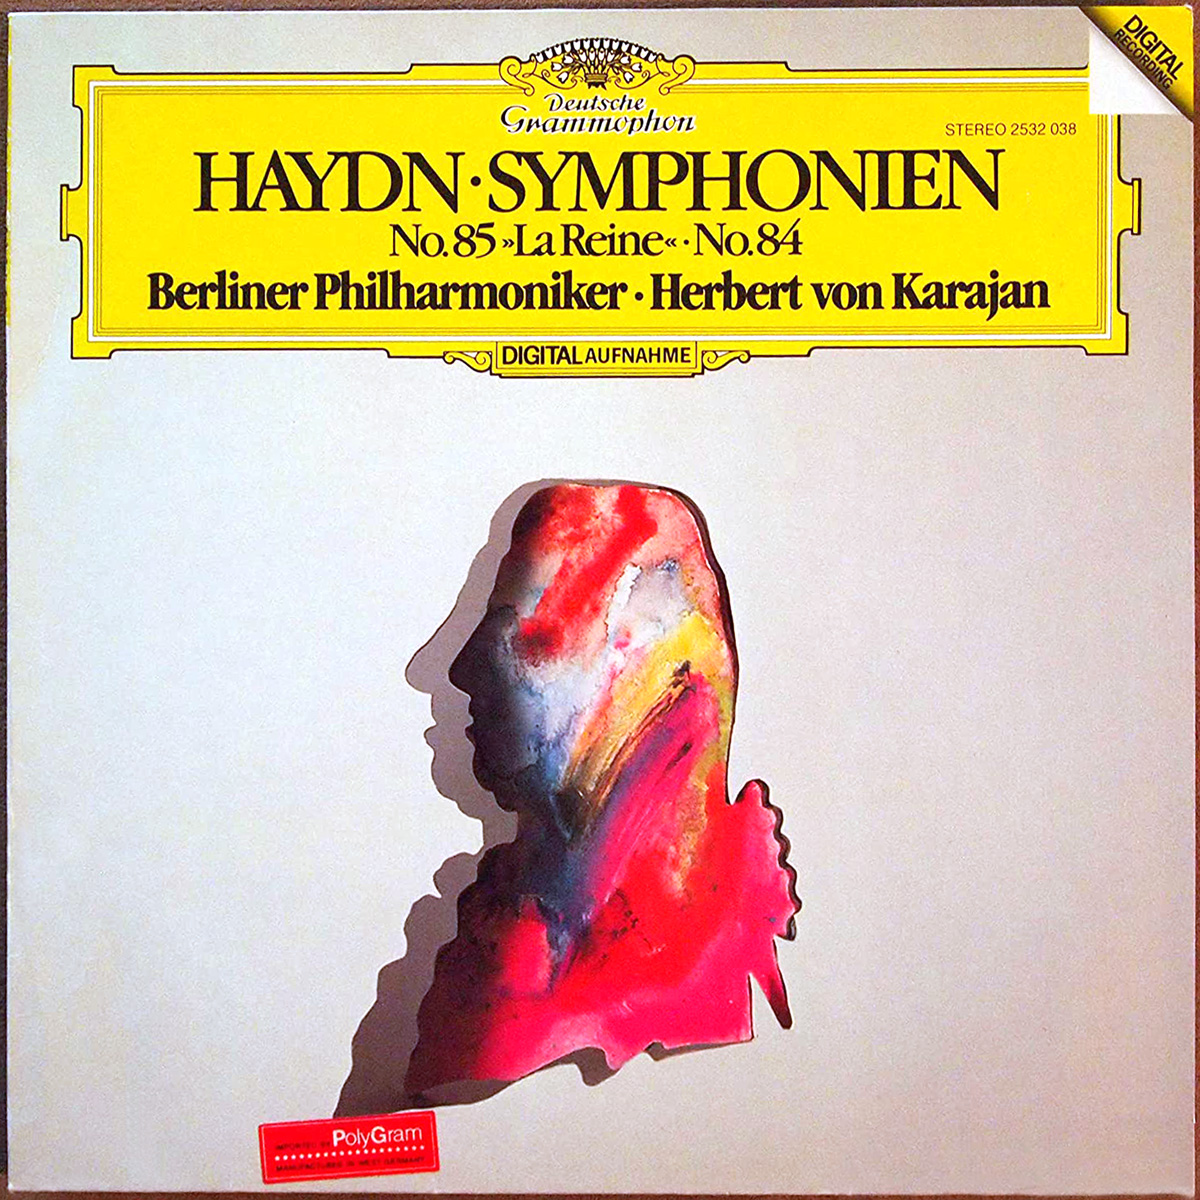 DGG 2532038 Haydn Symphonies 85 84 Karajan DGG Digital Aufnahme